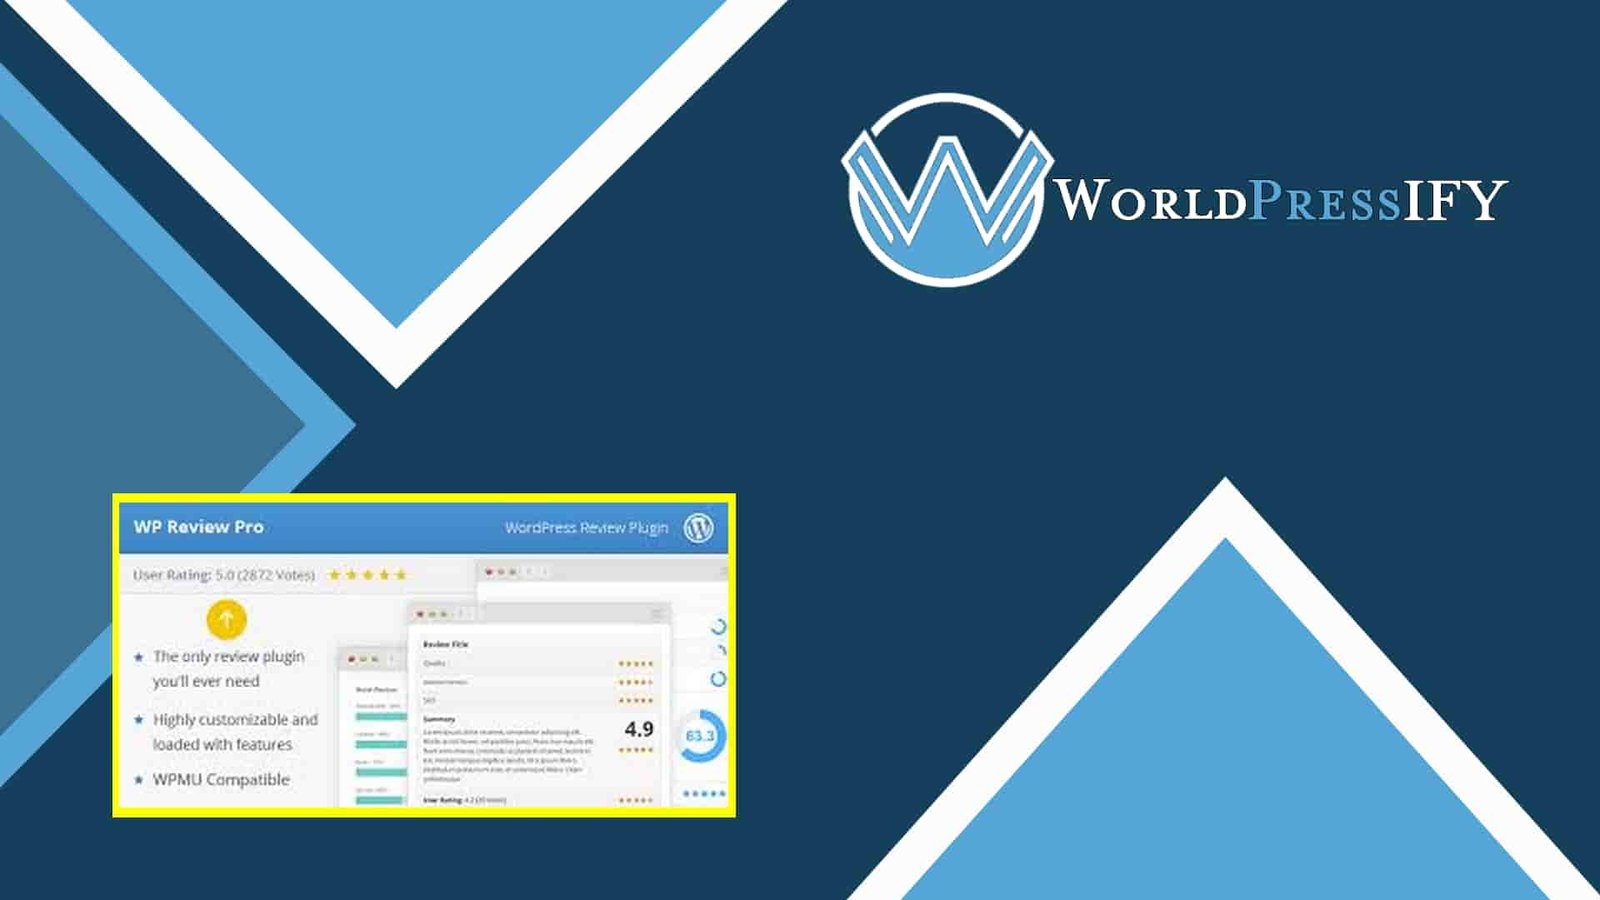 WP Review Pro – MyThemeShop - WorldPress IFY